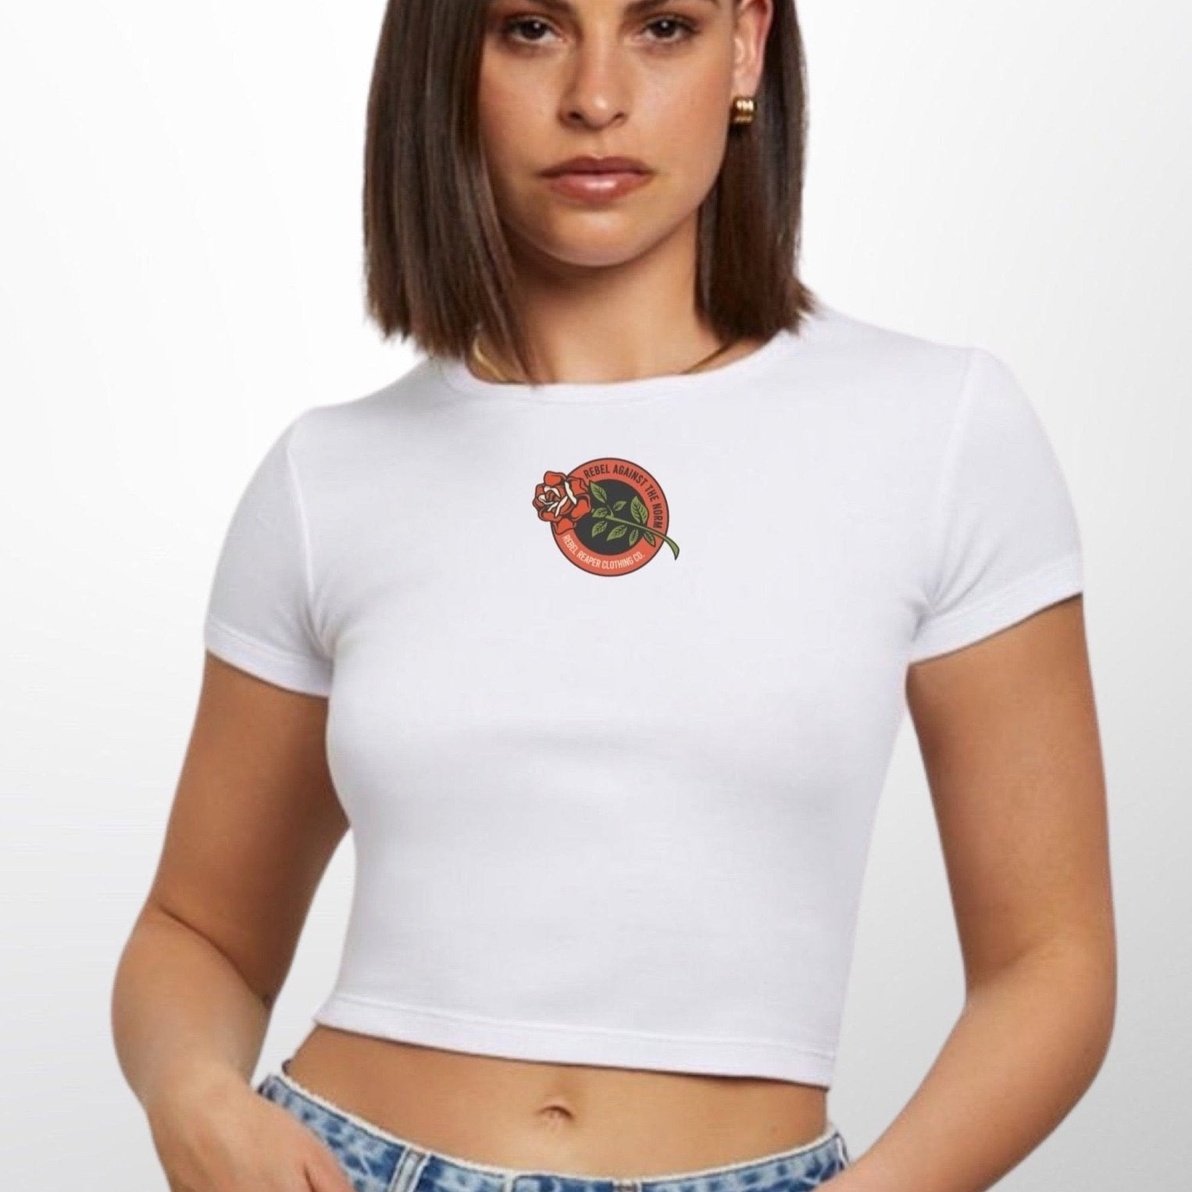 Women's White Simple Rose Baby Tee - Rebel Reaper Clothing Company Women's Shirts